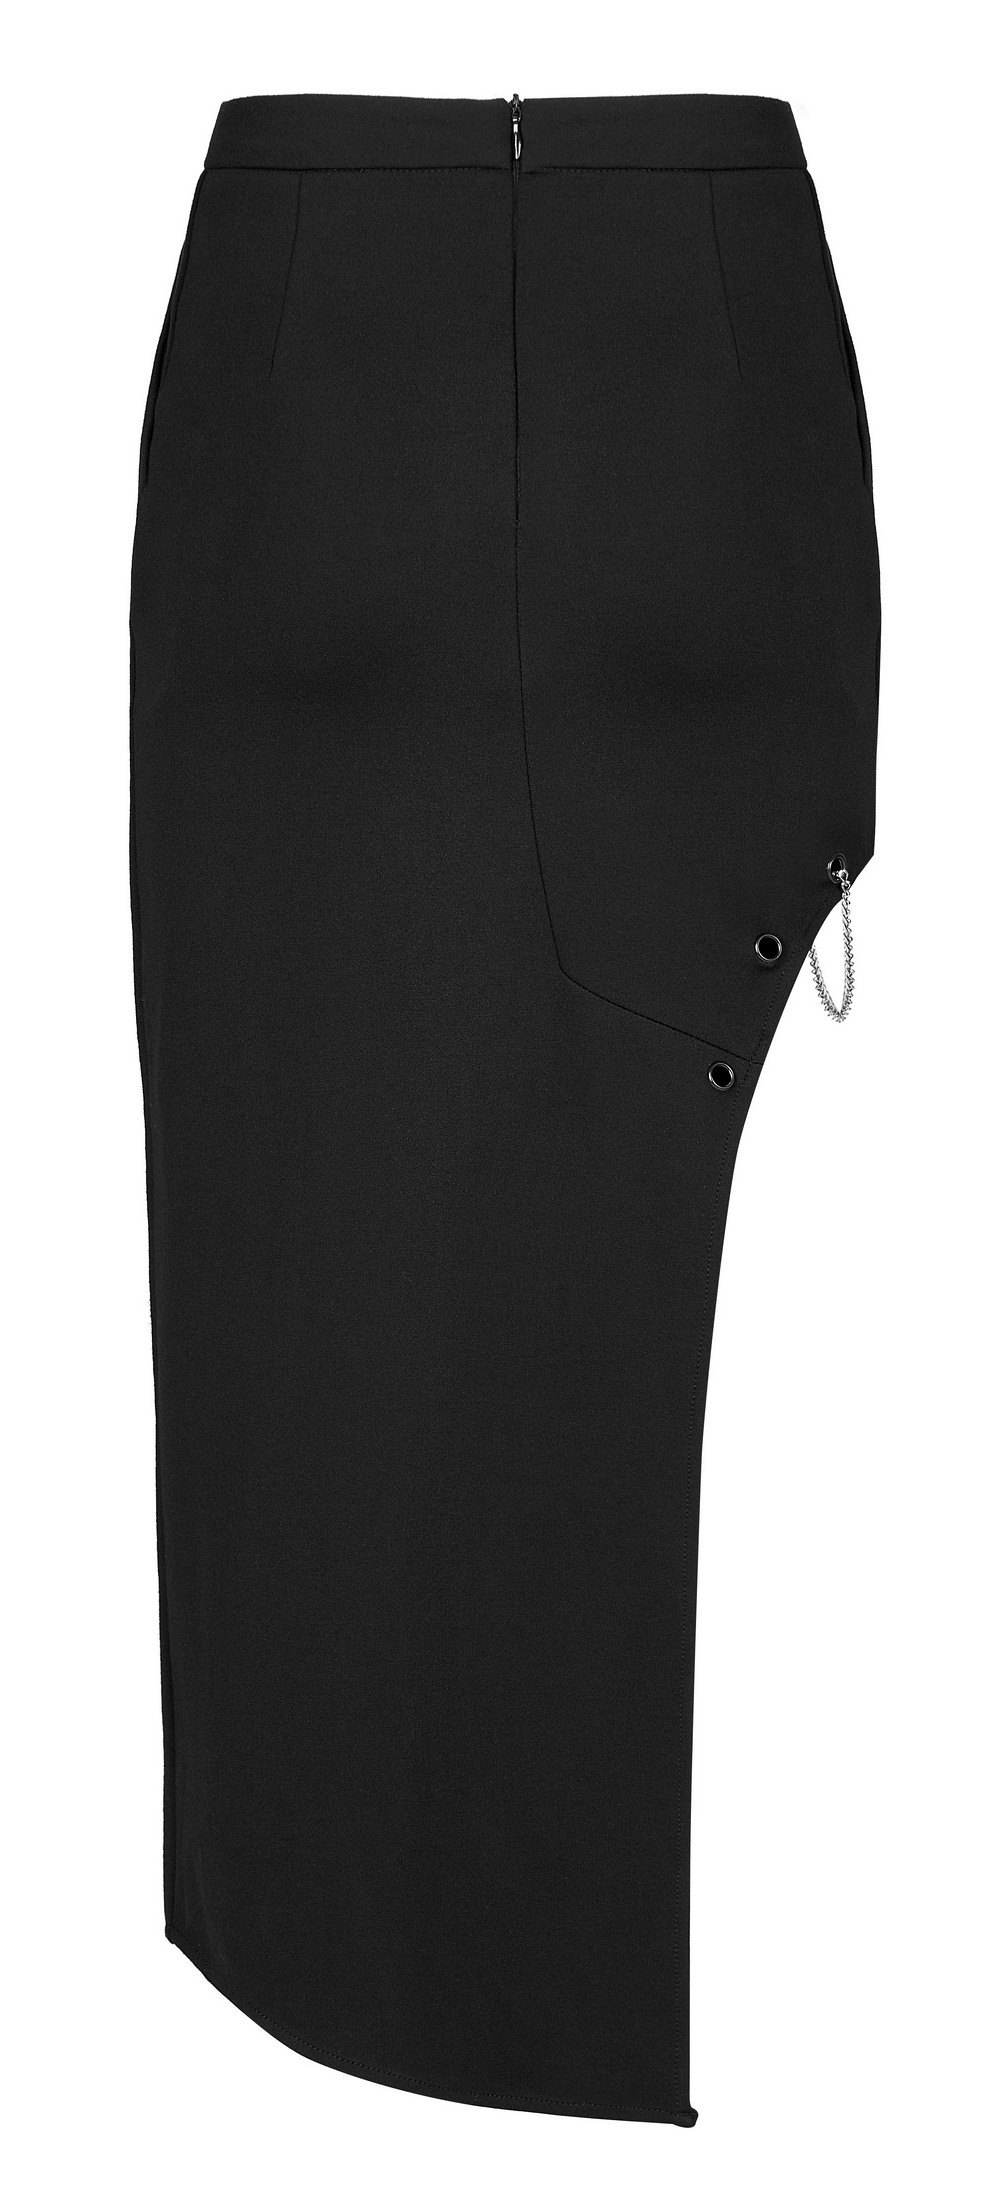 Black Dragon Print Asymmetric Skirt with Chains